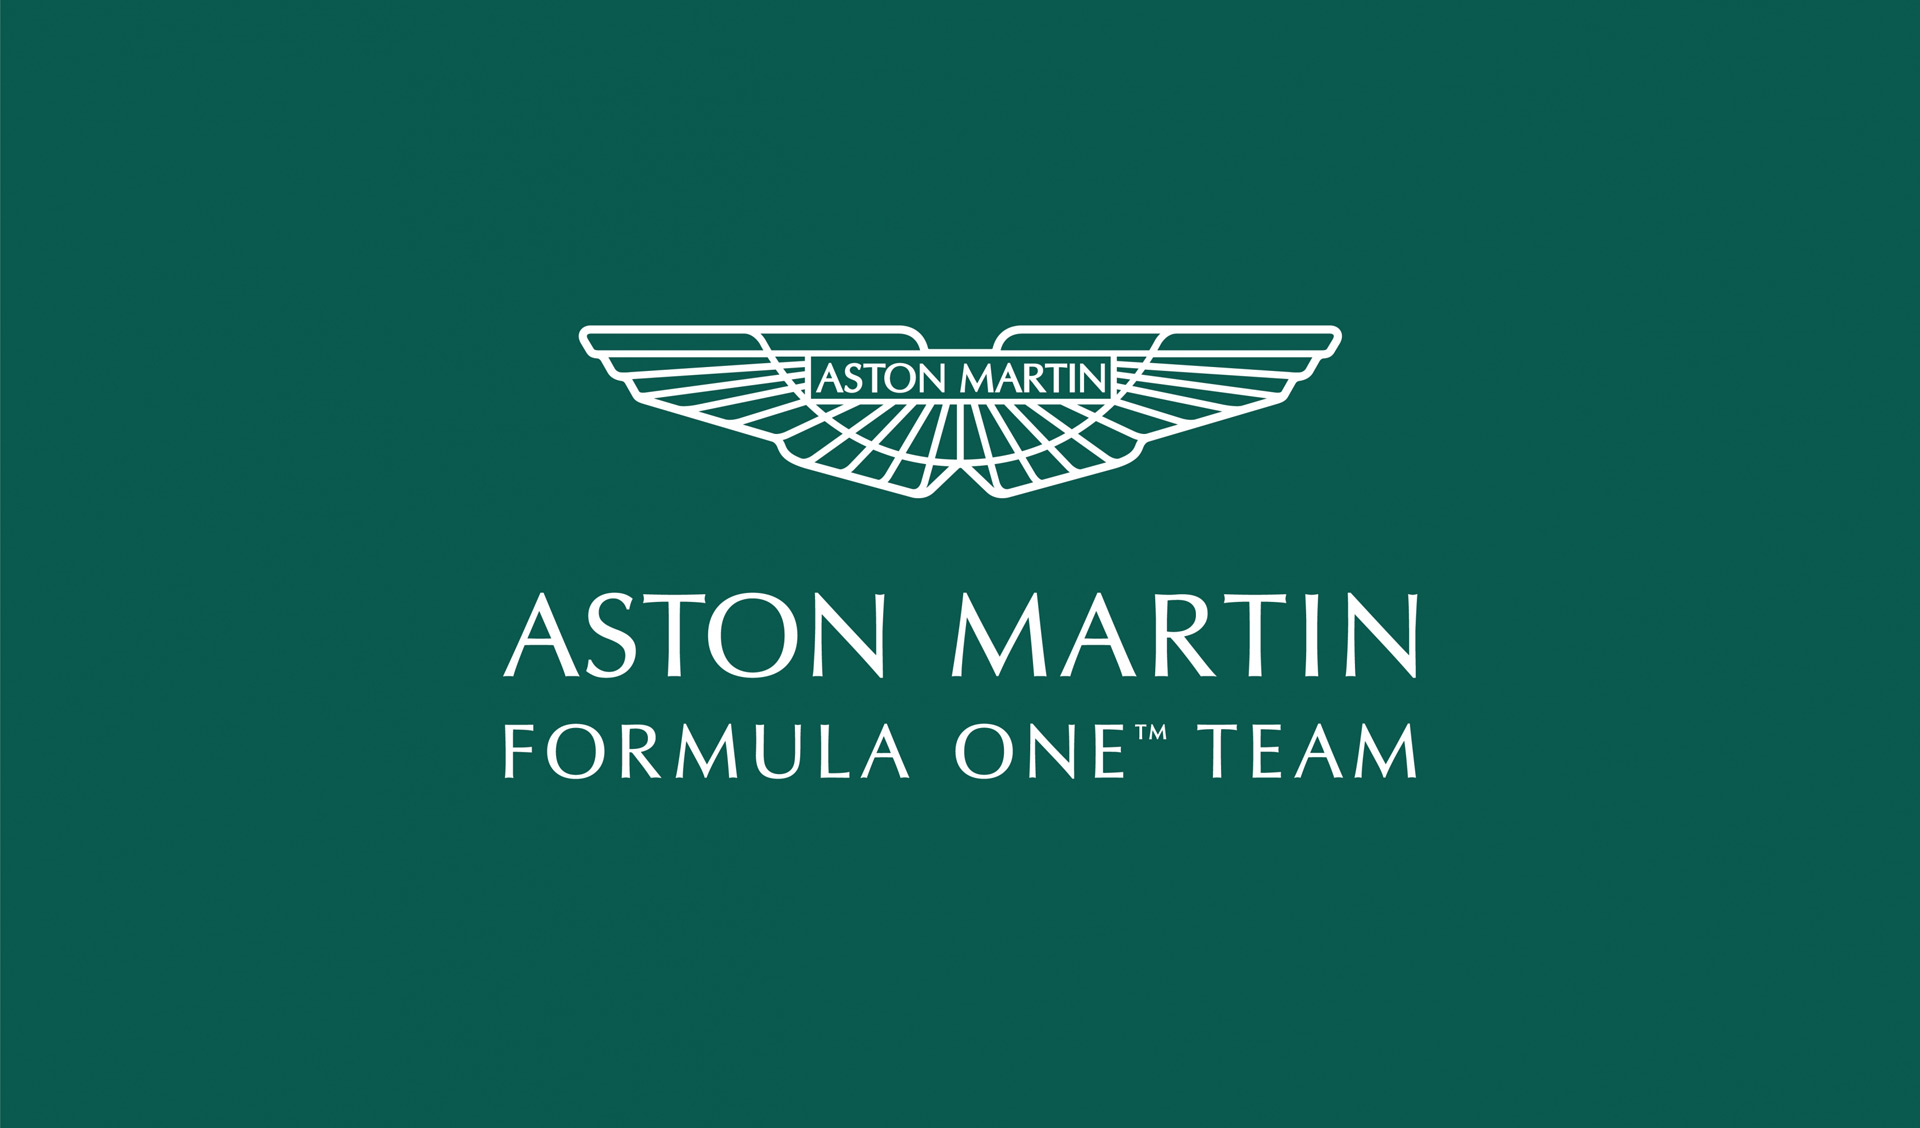 Aston Martin F1 team readies new headquarters at Silverstone